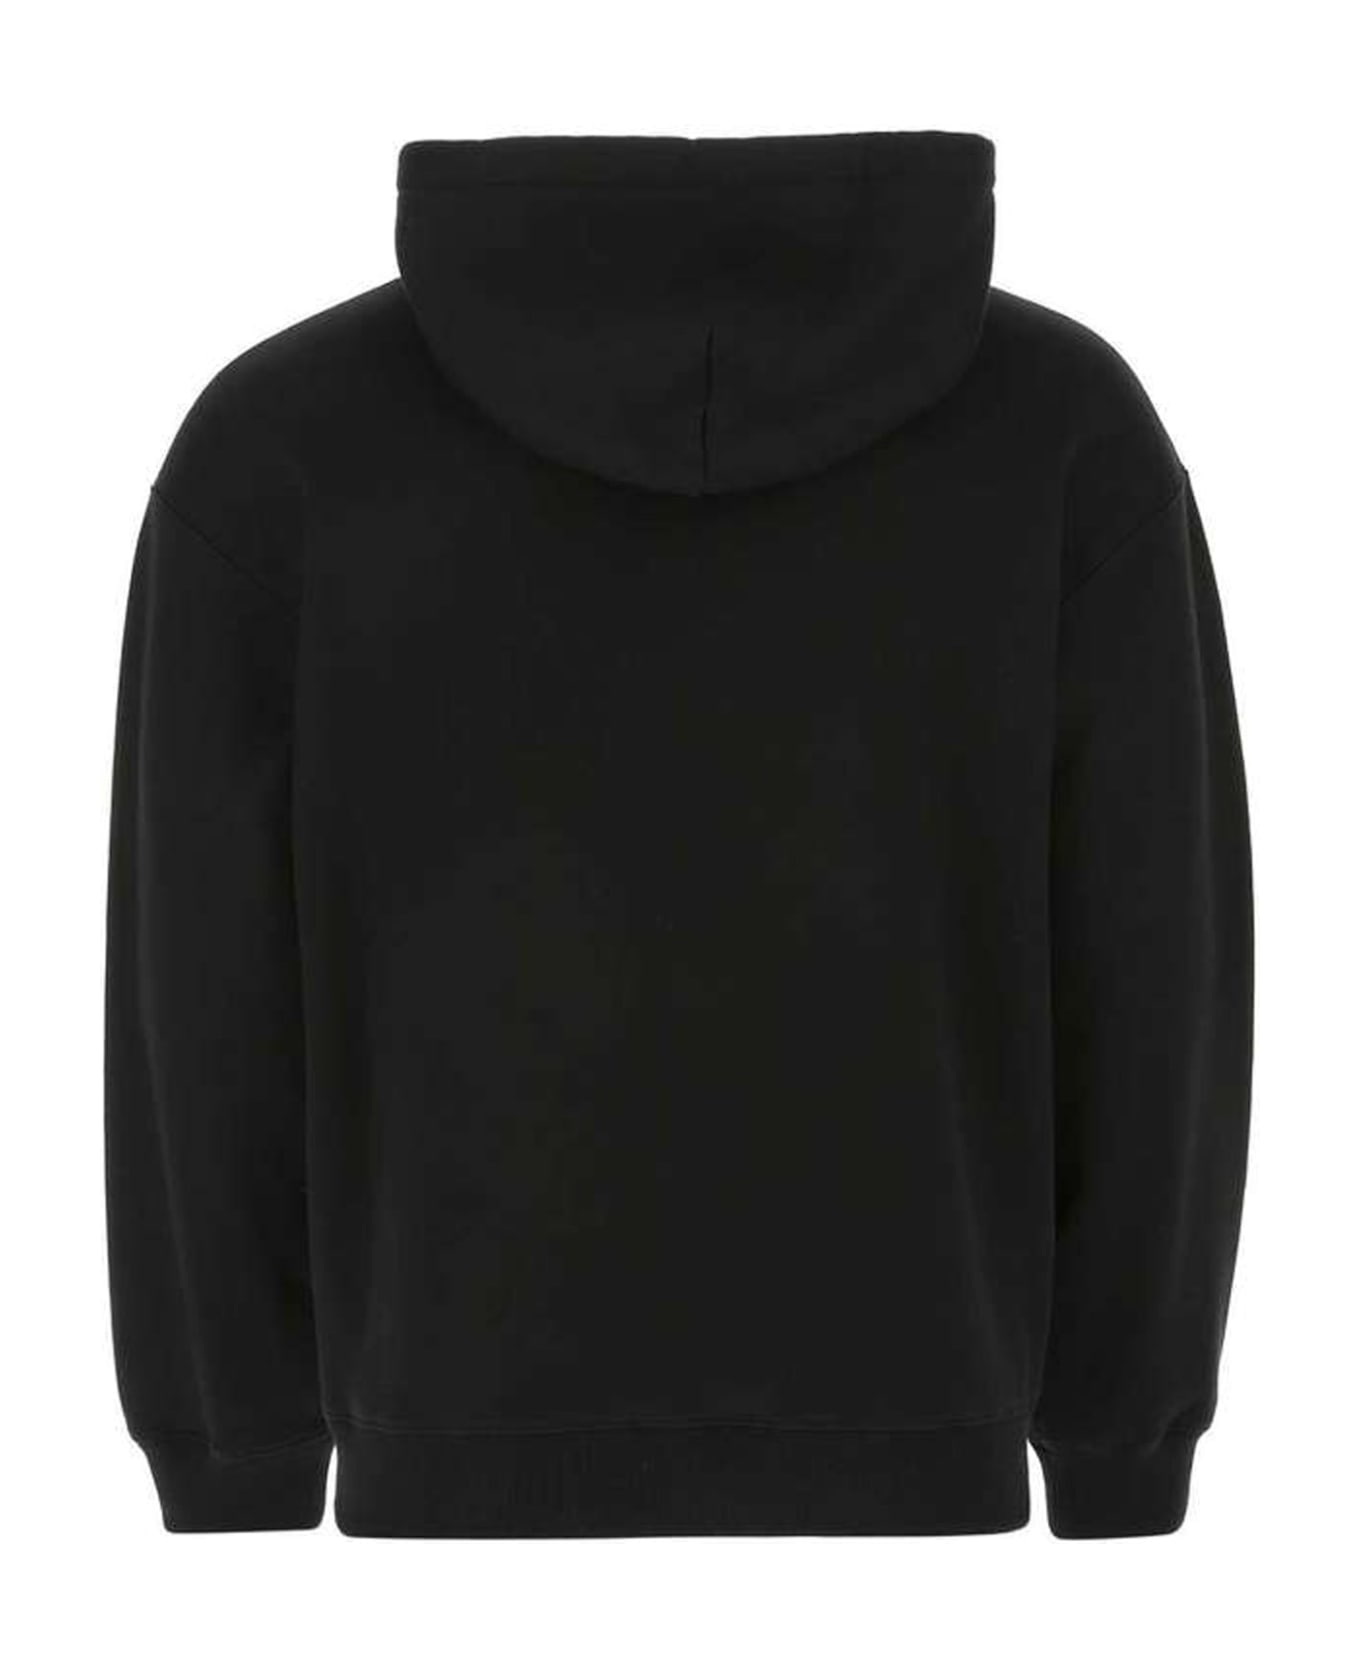 Valentino Good Lover Sweatshirt - Black フリース